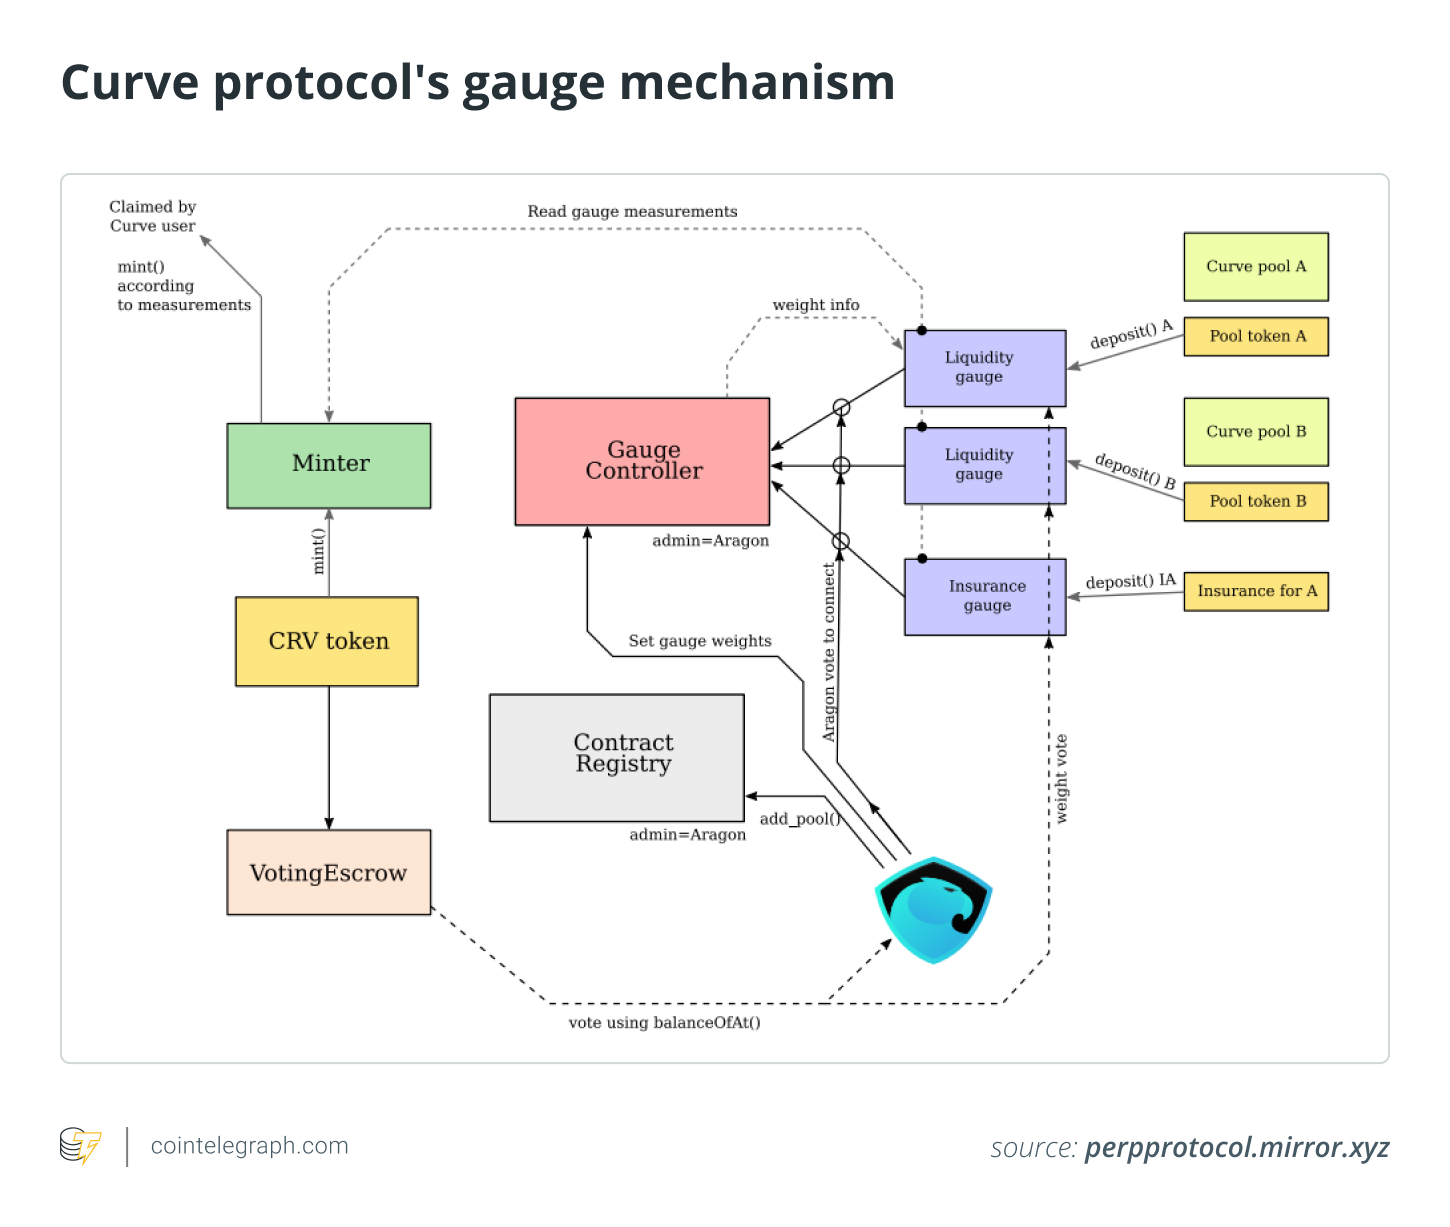 Curve protocols gauge mechanism